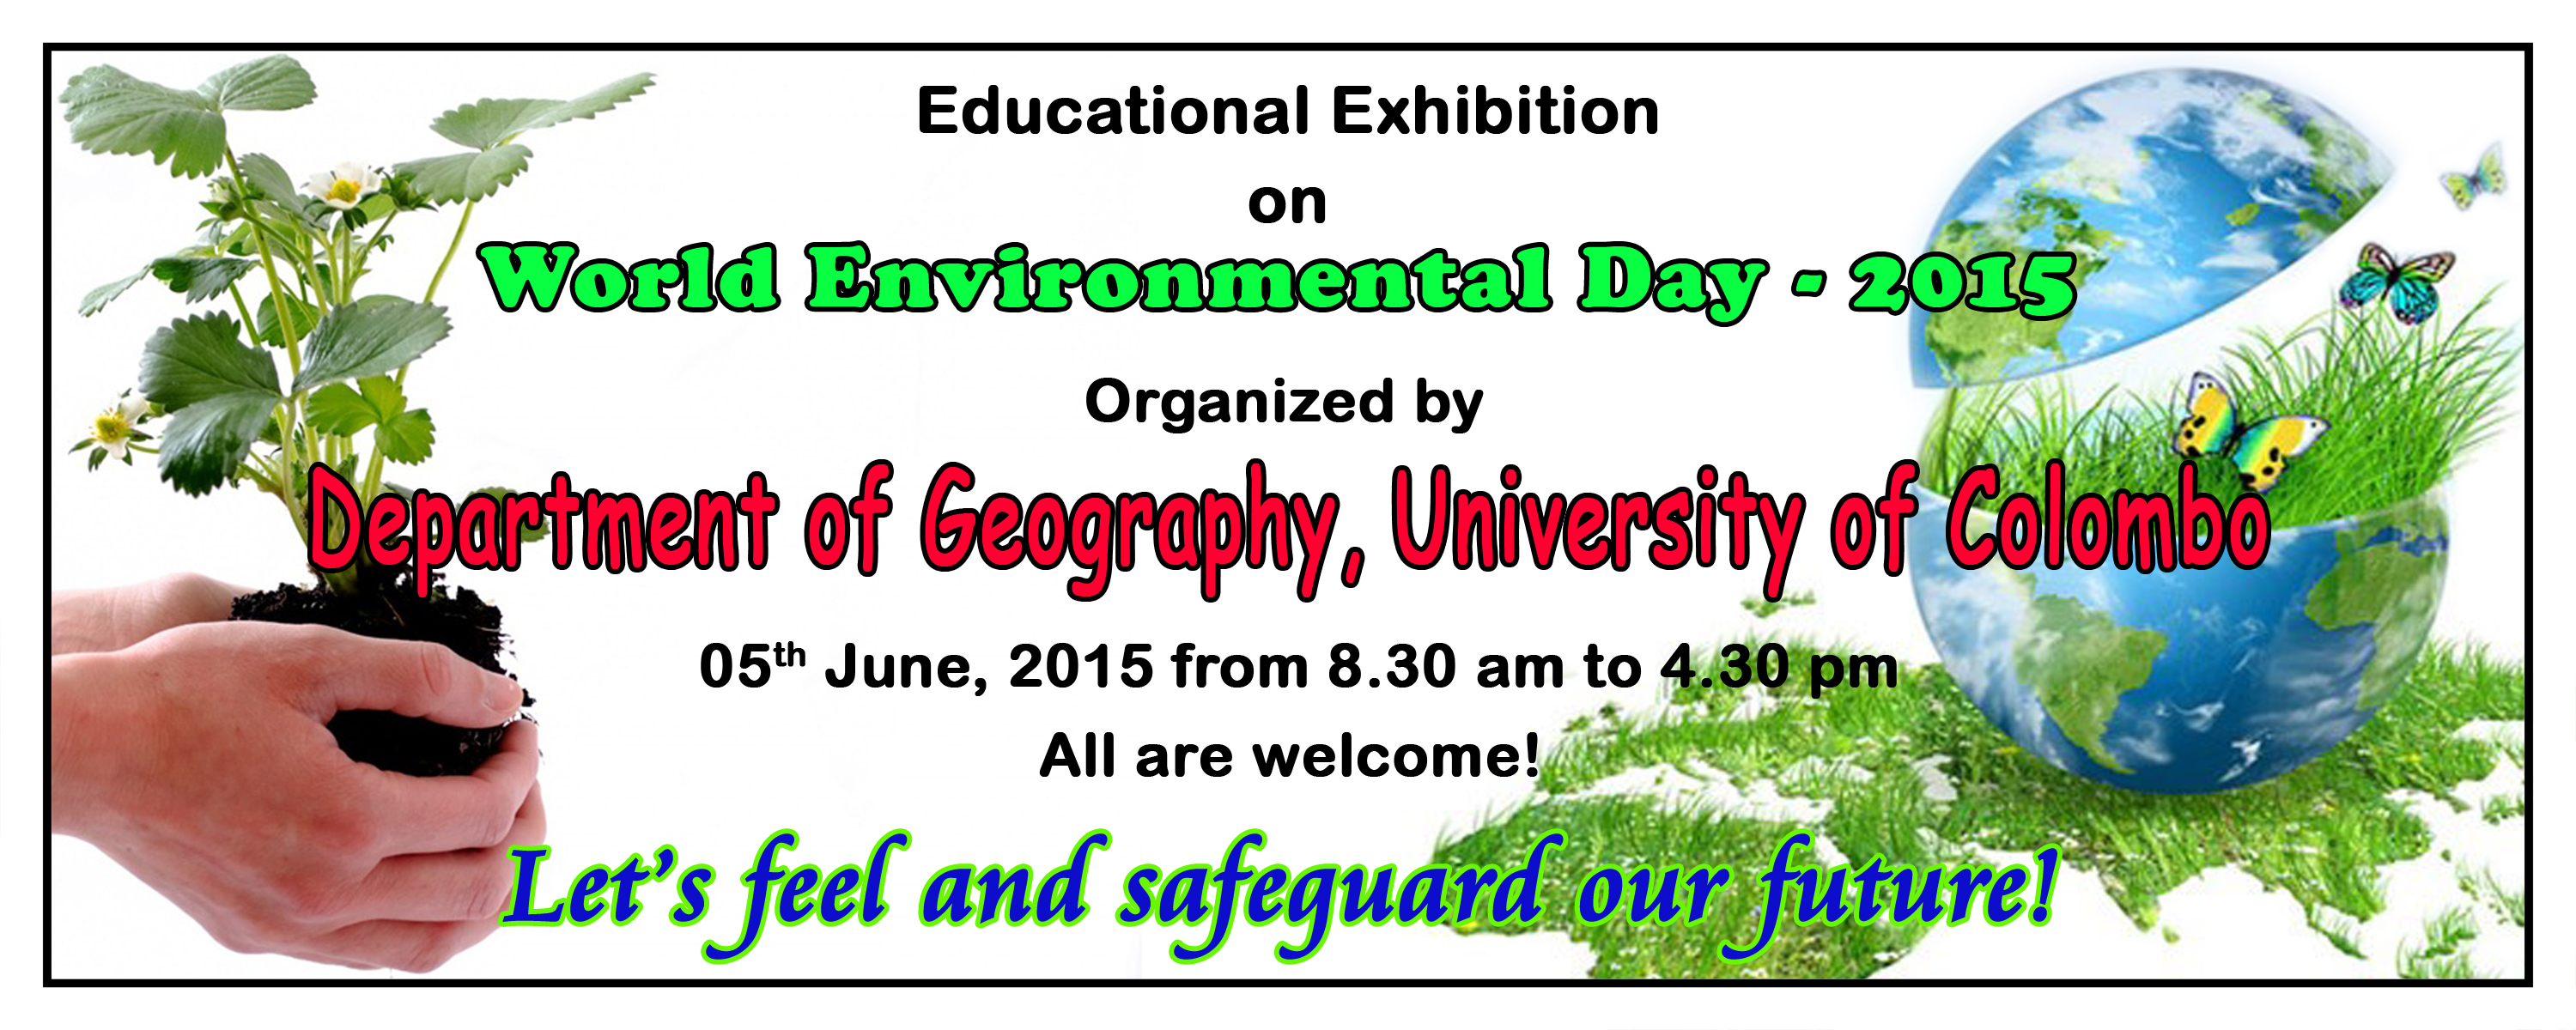 Educational Exhibition – World Environmental Day 2015